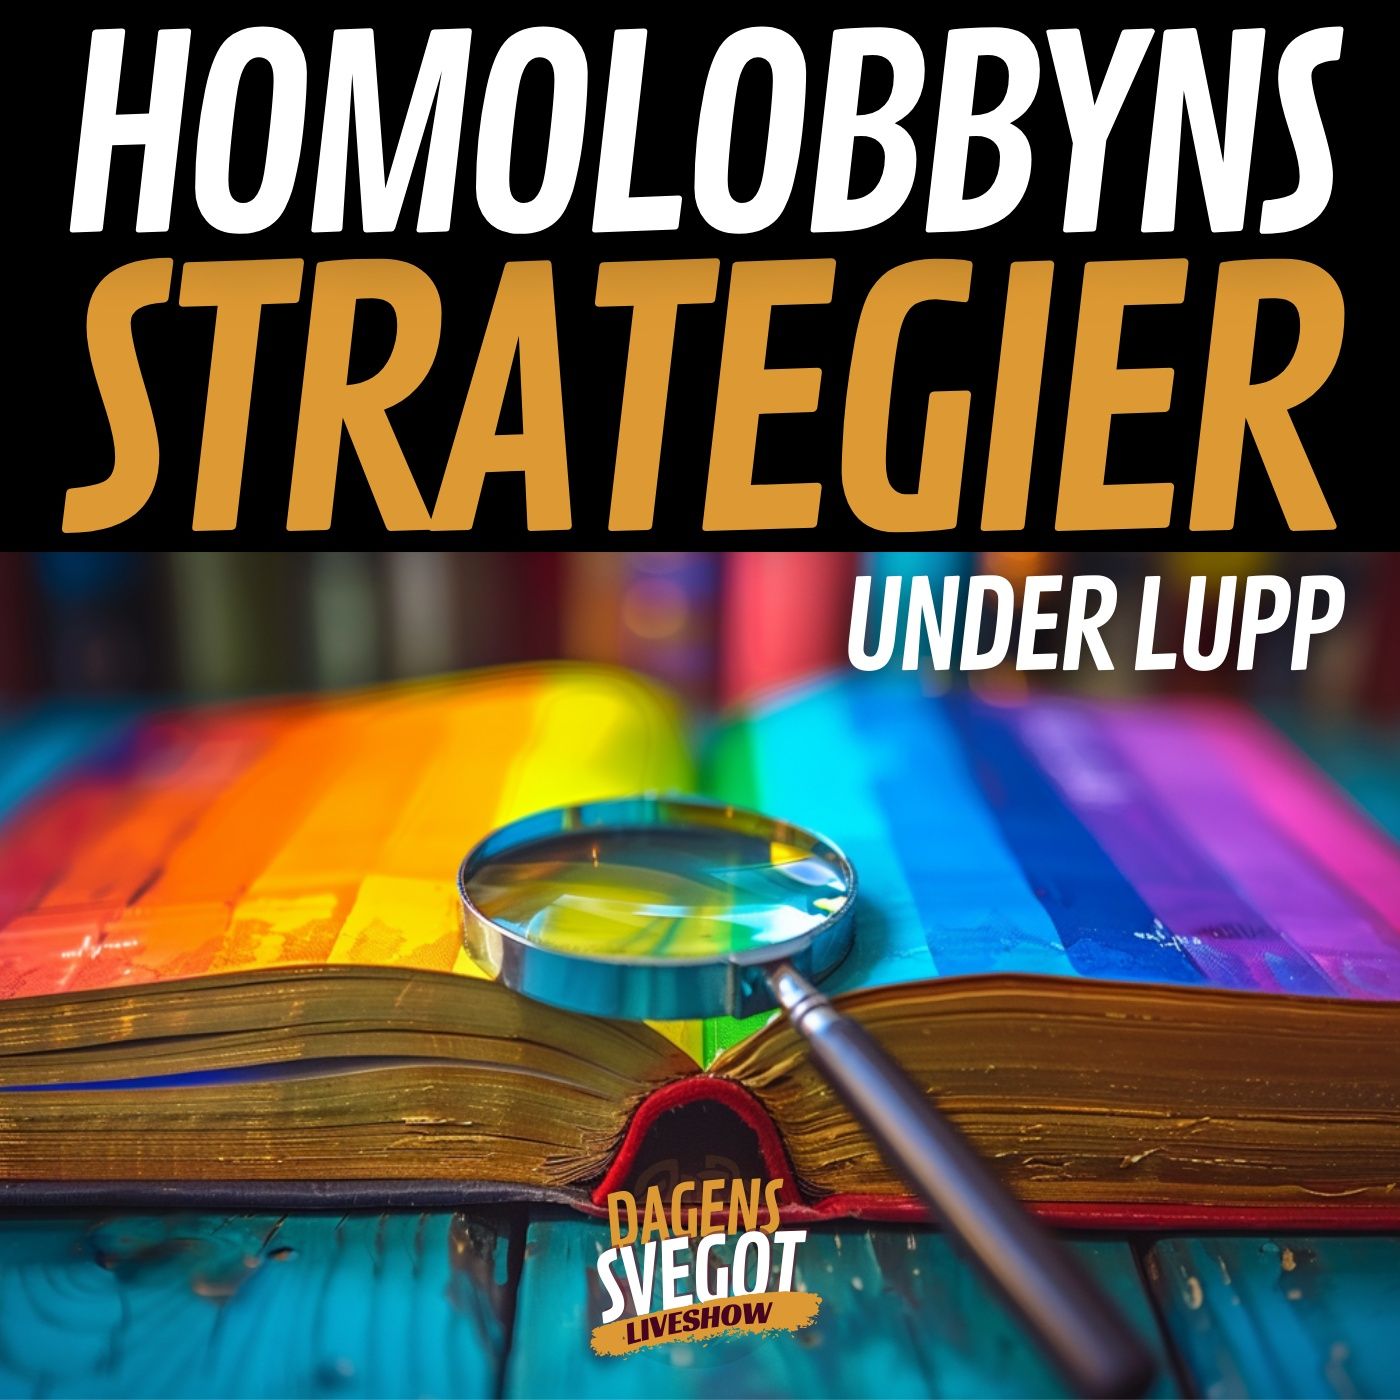 Homolobbyns strategier under lupp